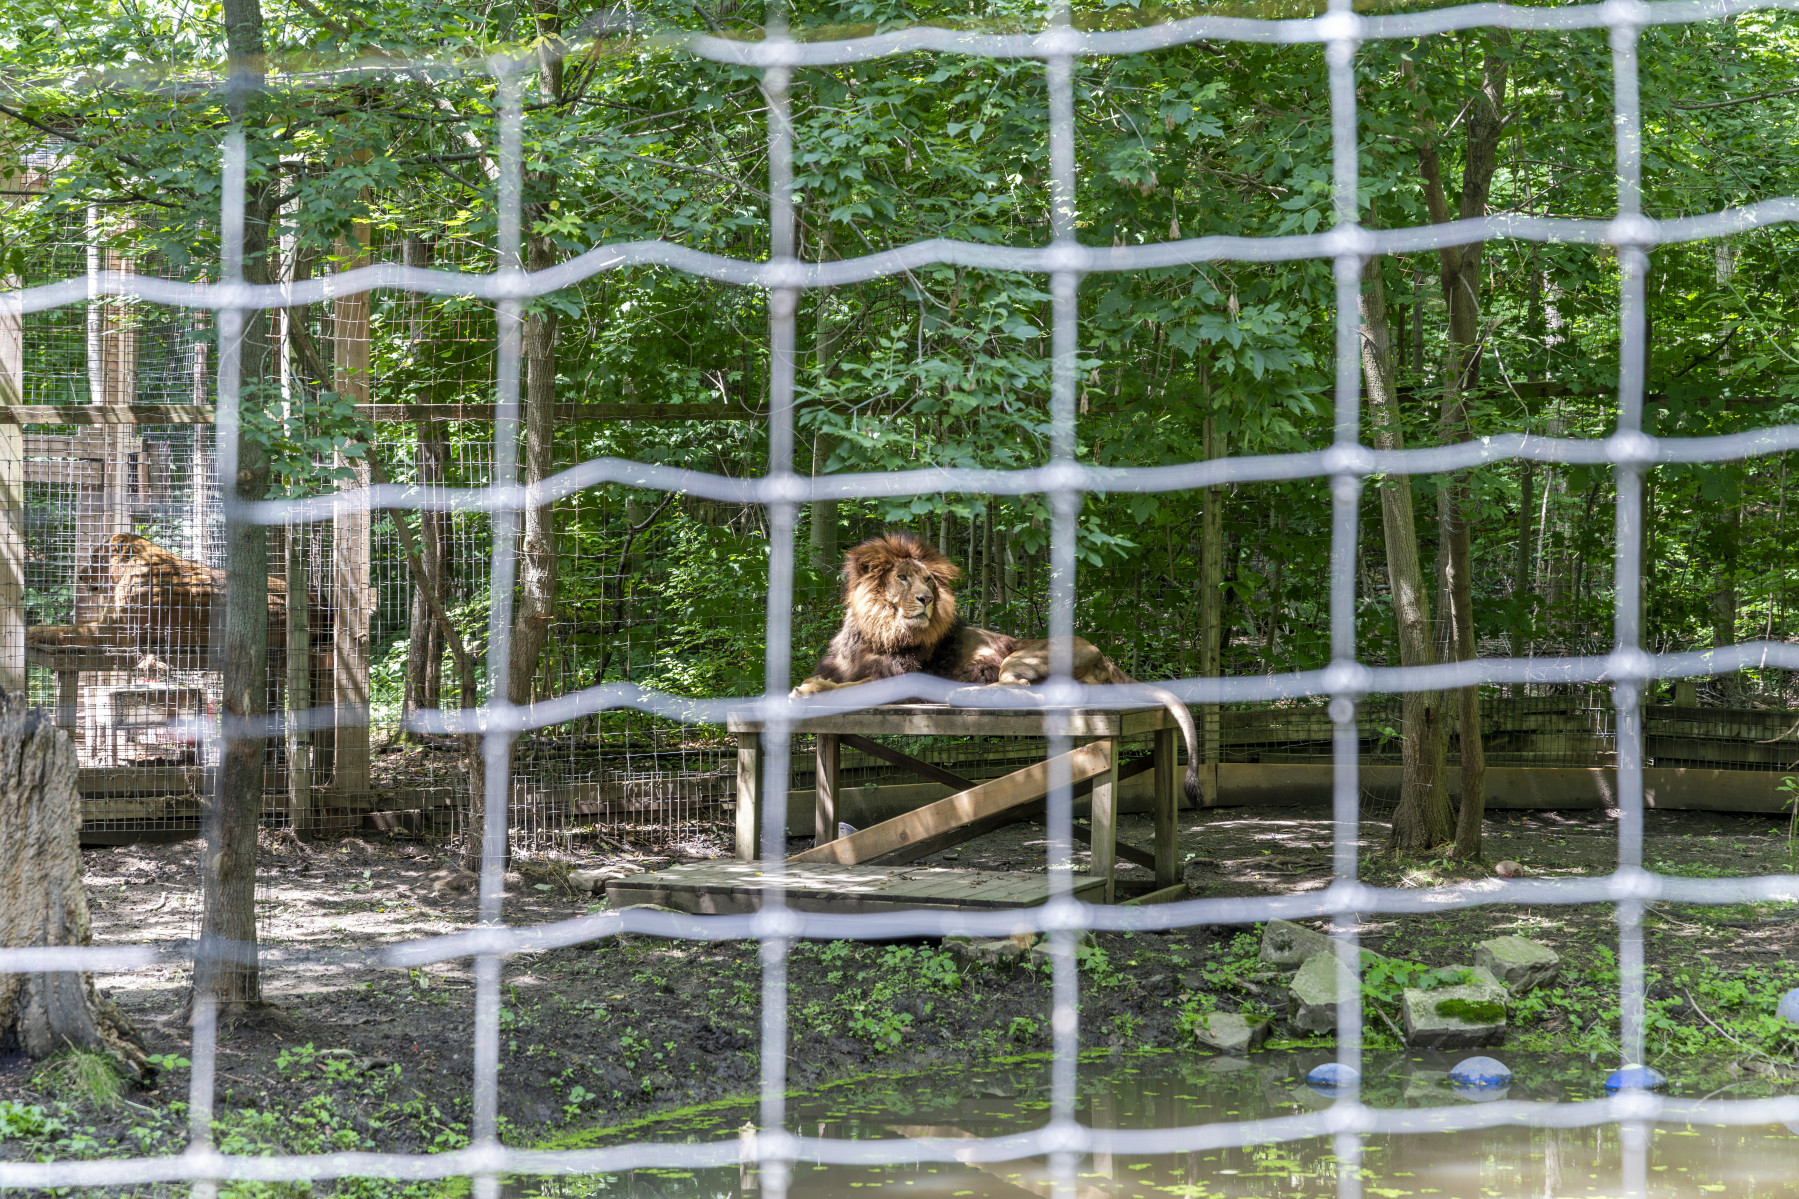 A lion in a roadside zoo in Ontario